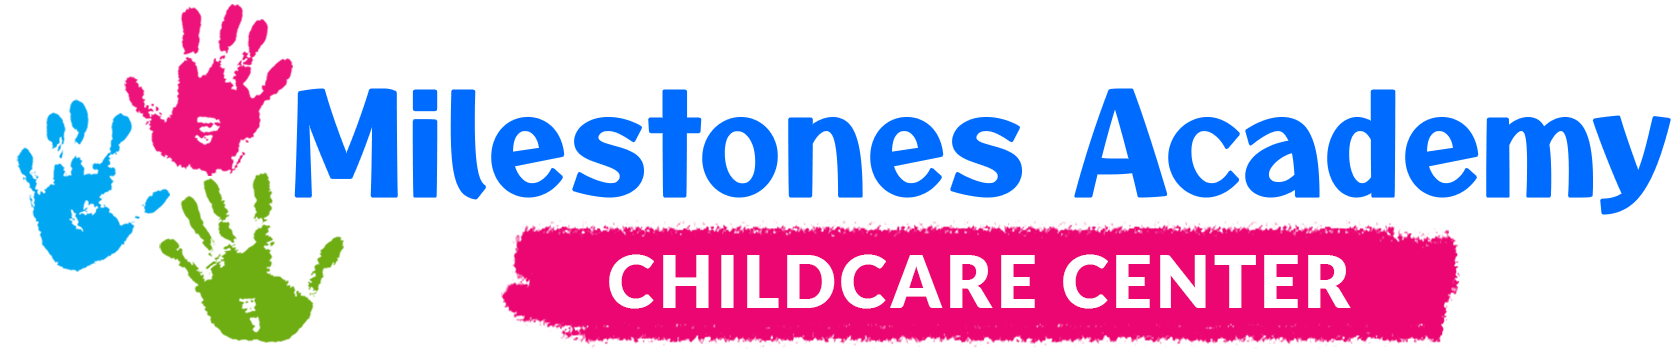 Milestones Academy Childcare Center - Main Logo